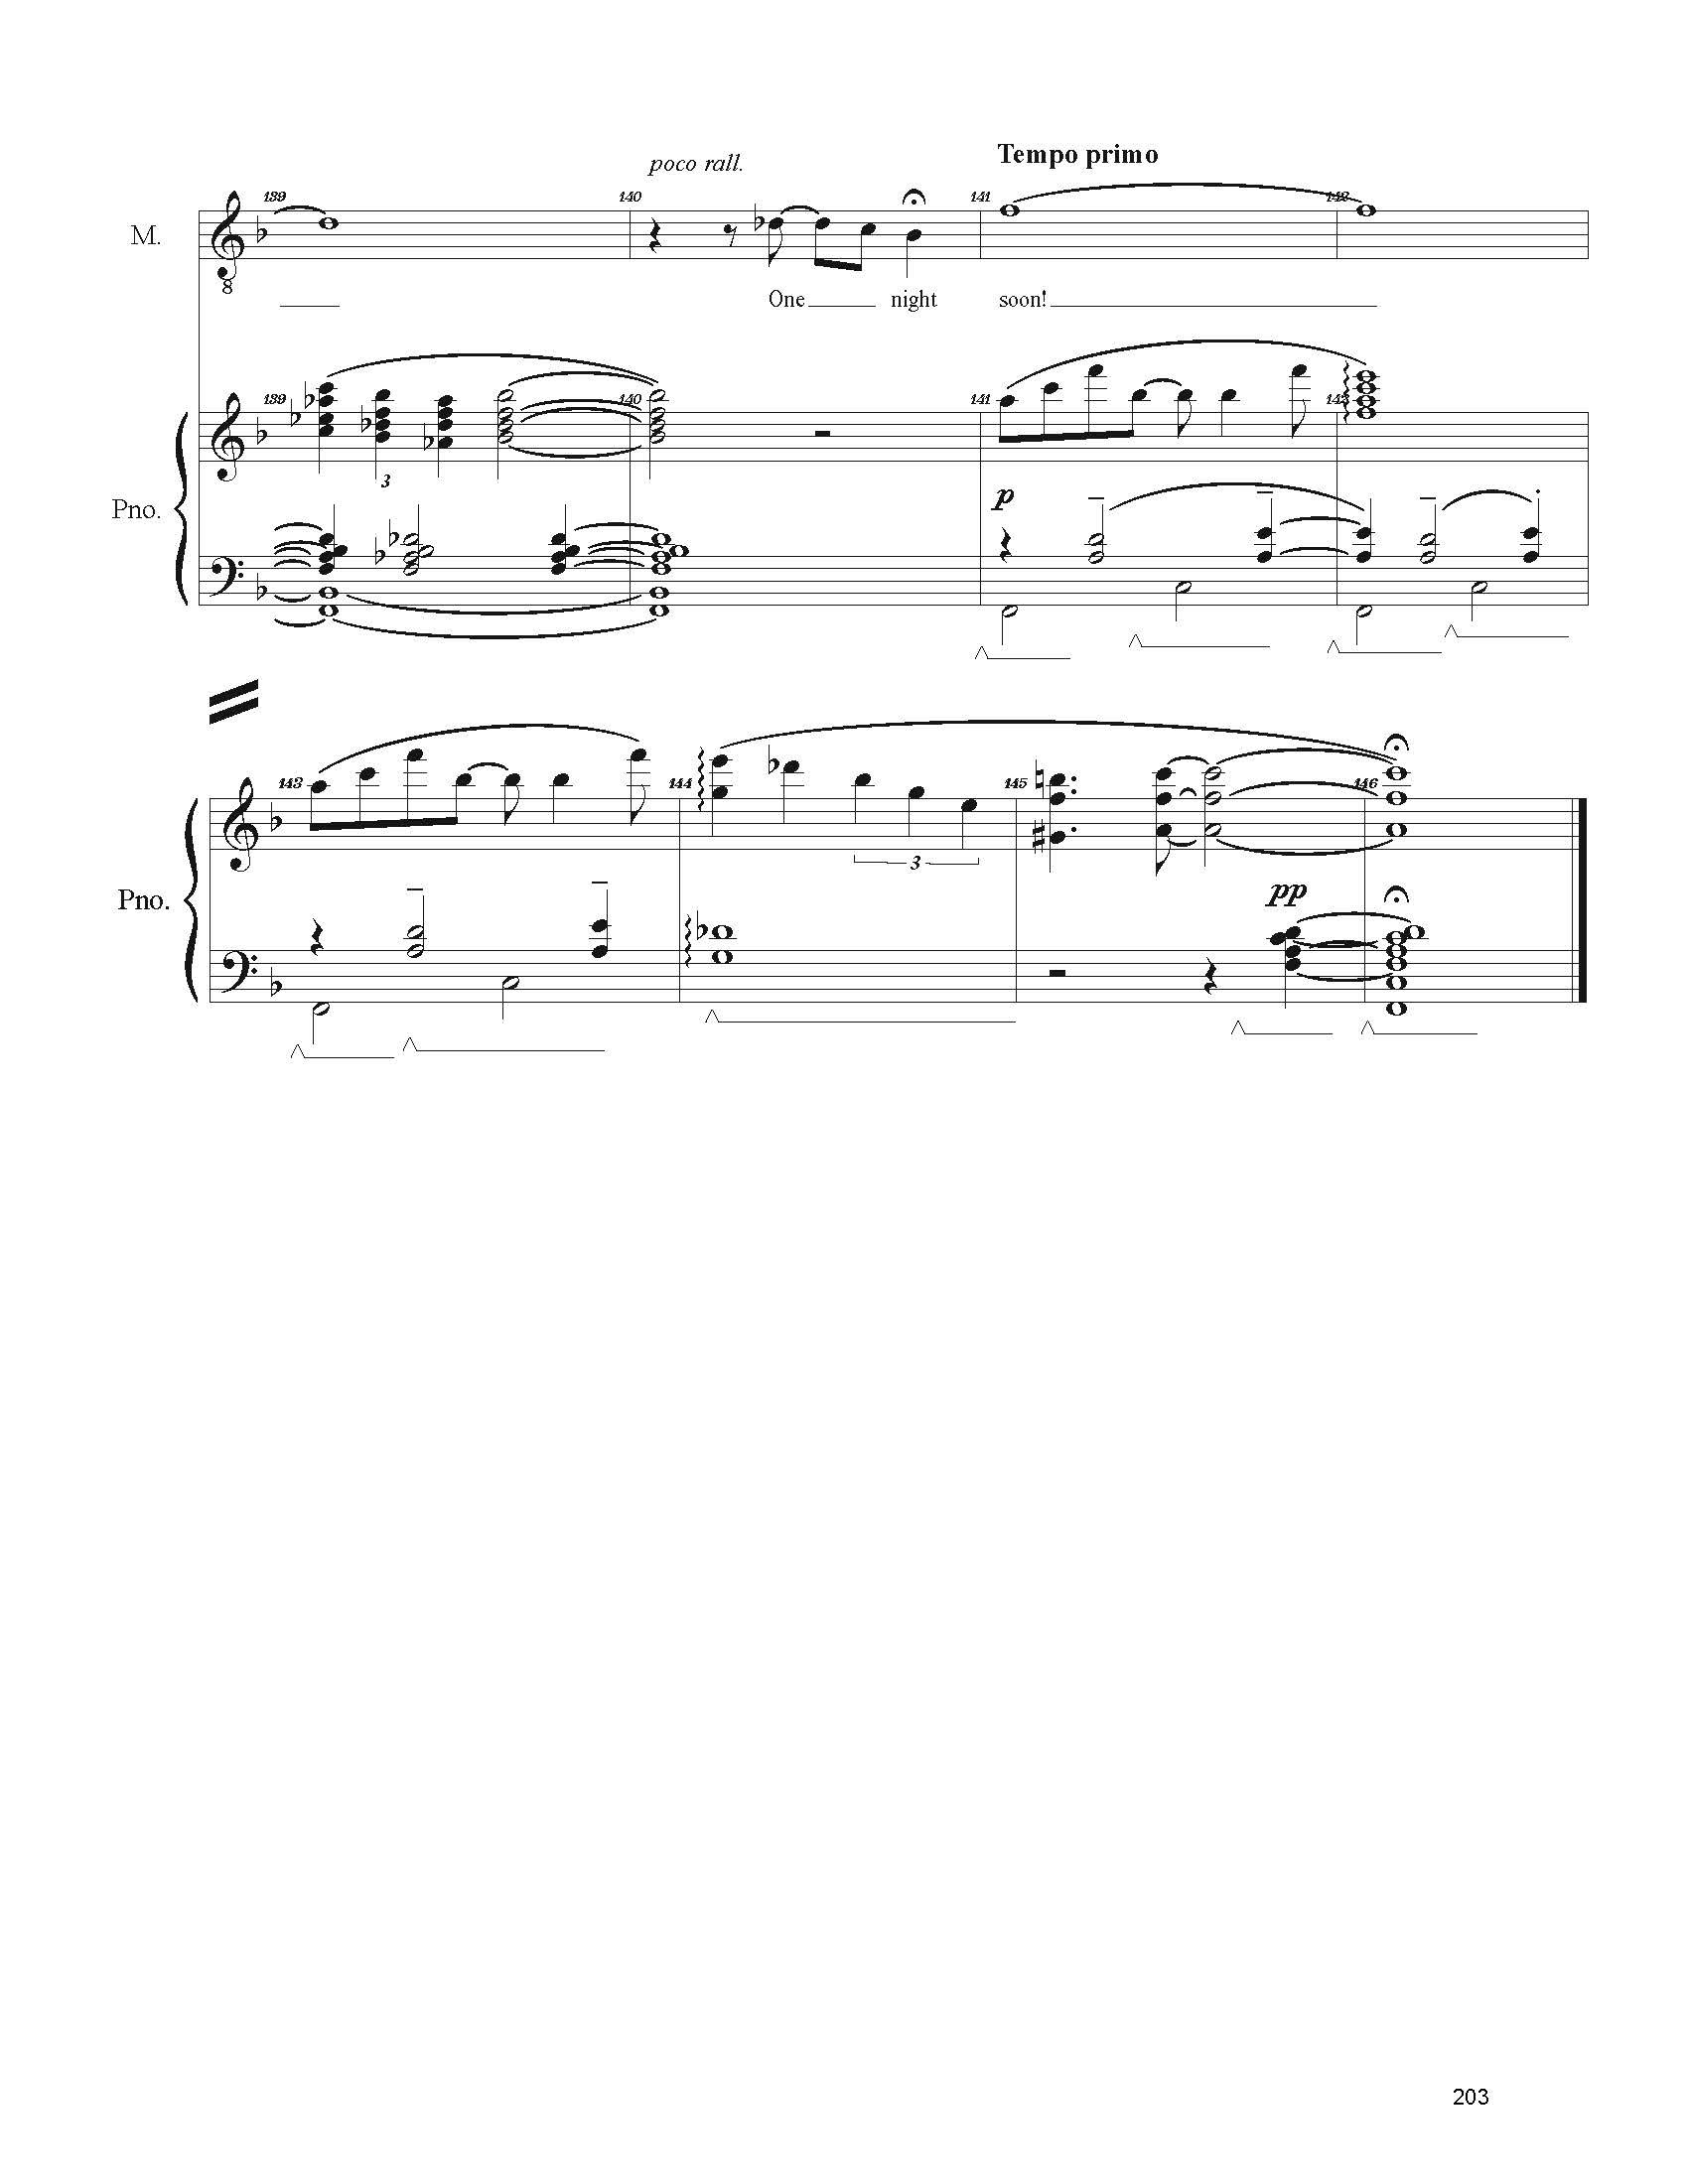 FULL PIANO VOCAL SCORE DRAFT 1 - Score_Page_203.jpg